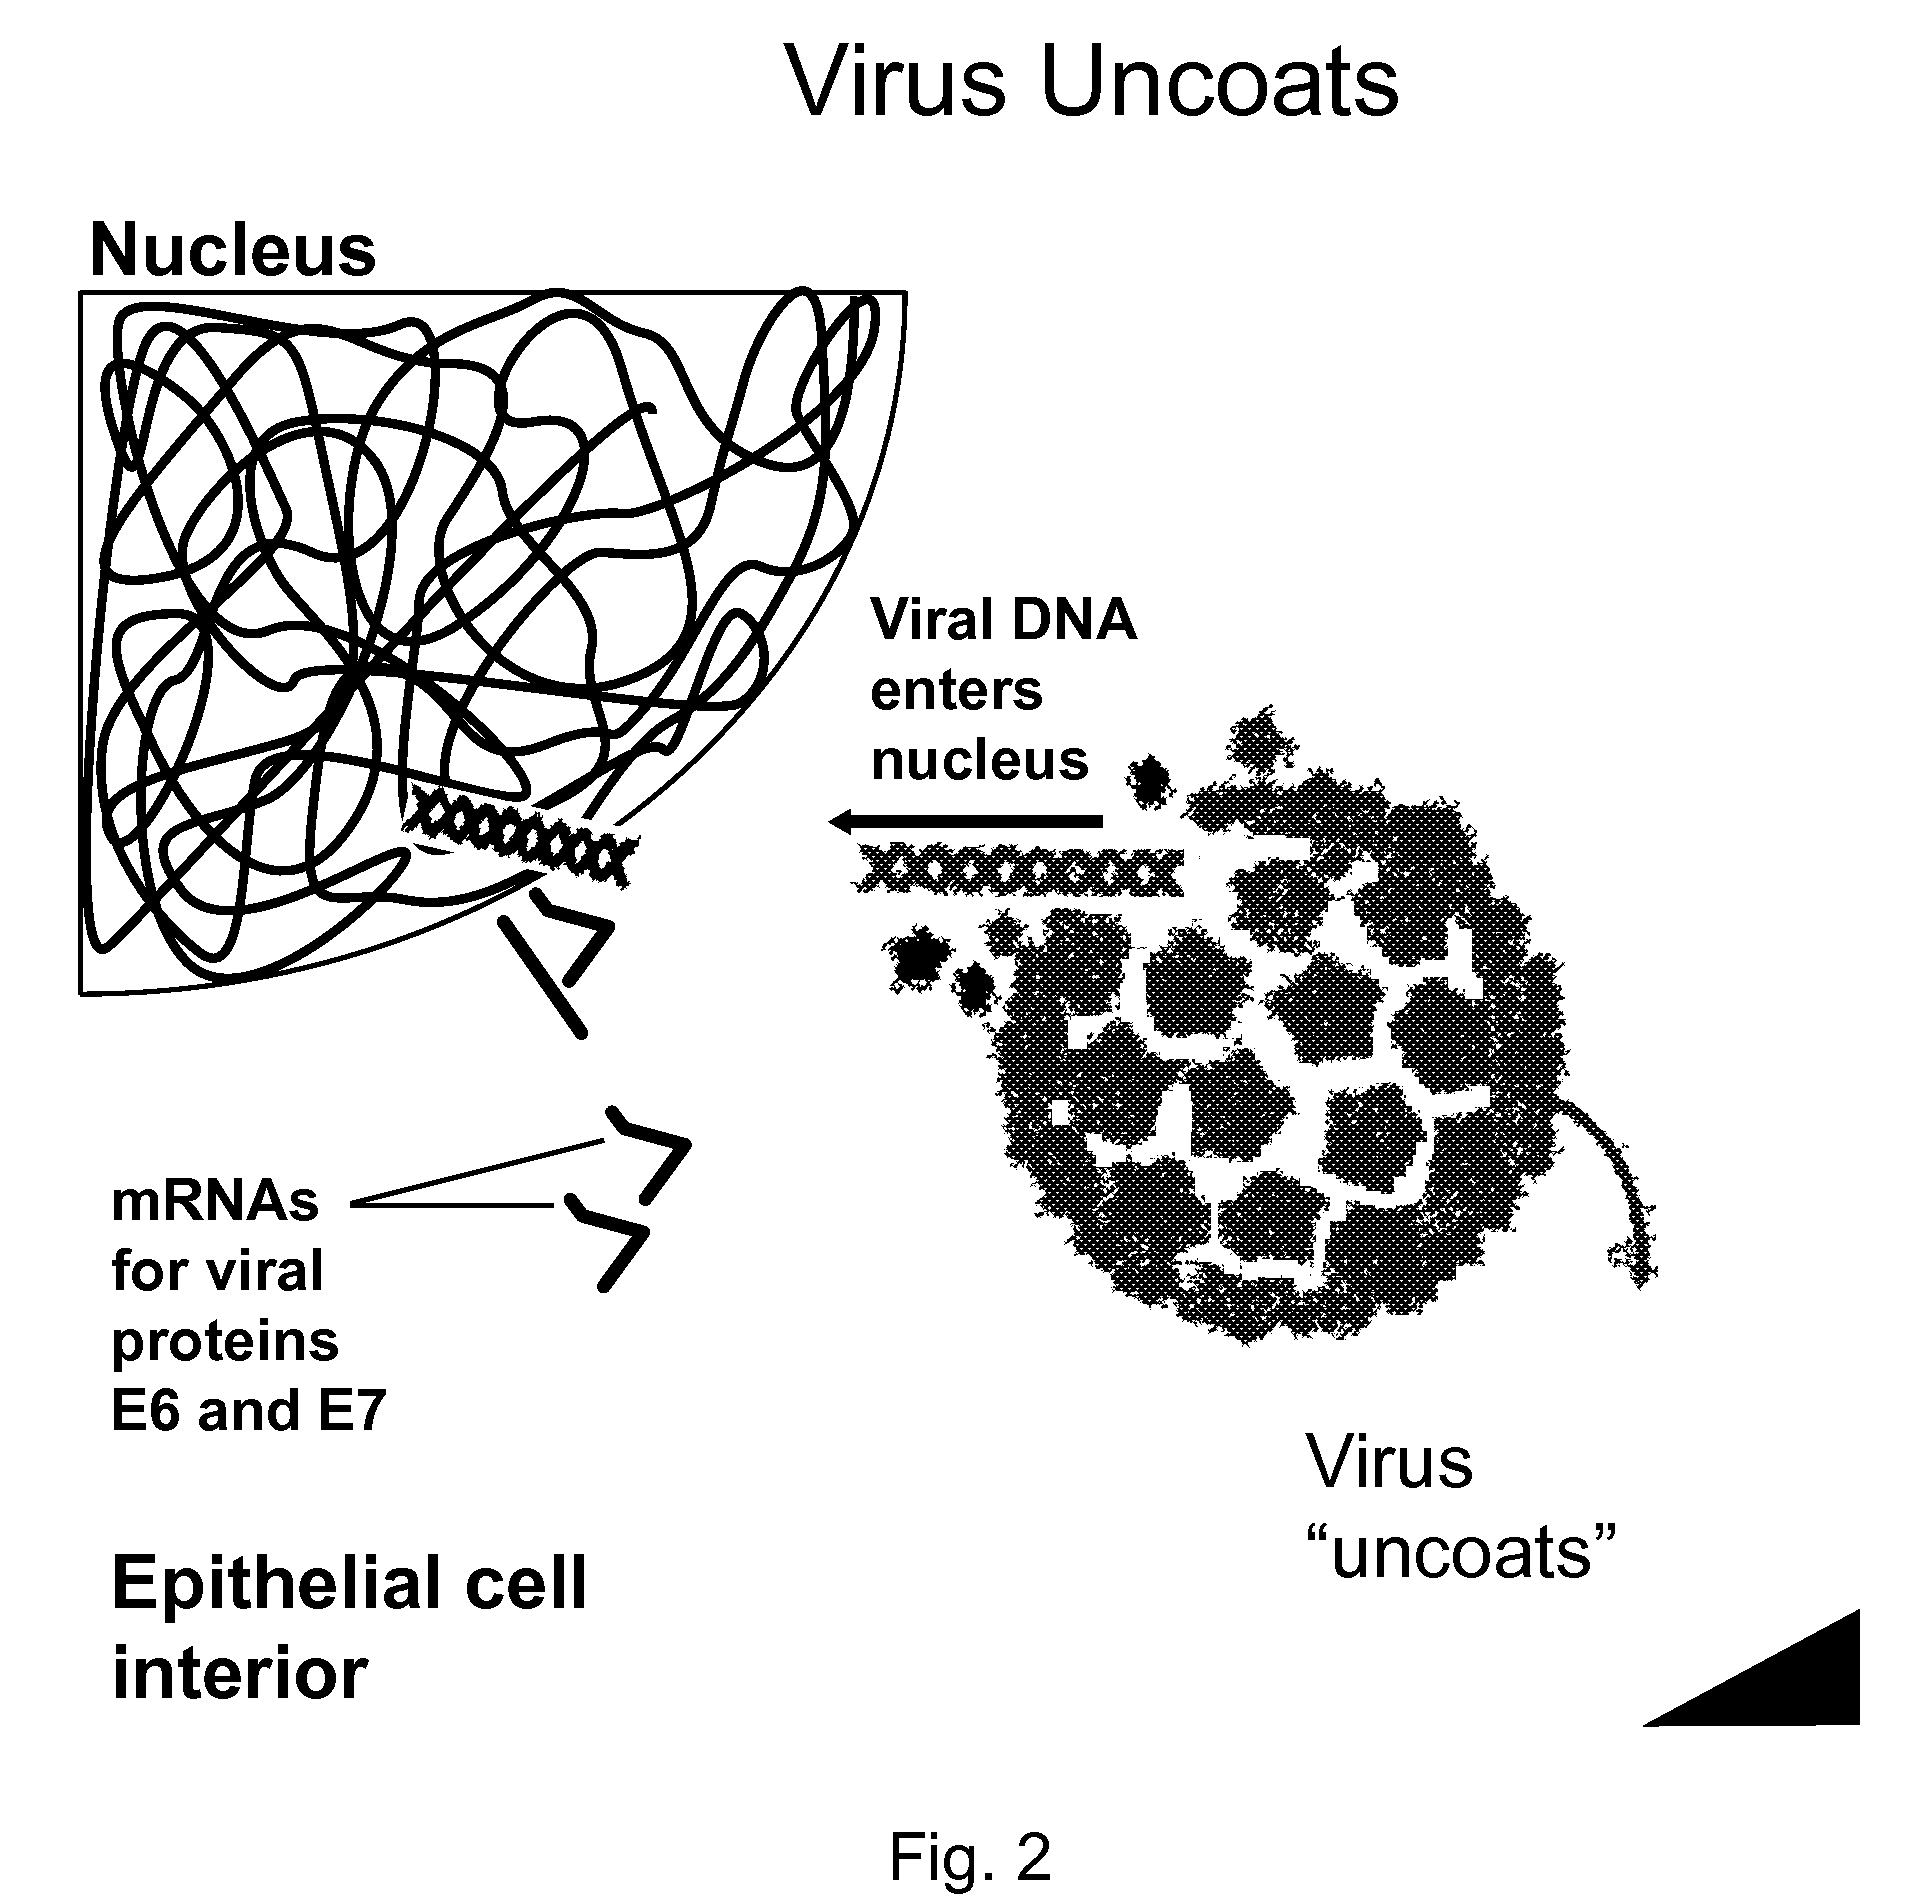 Anti-human papillomas virus topical composition